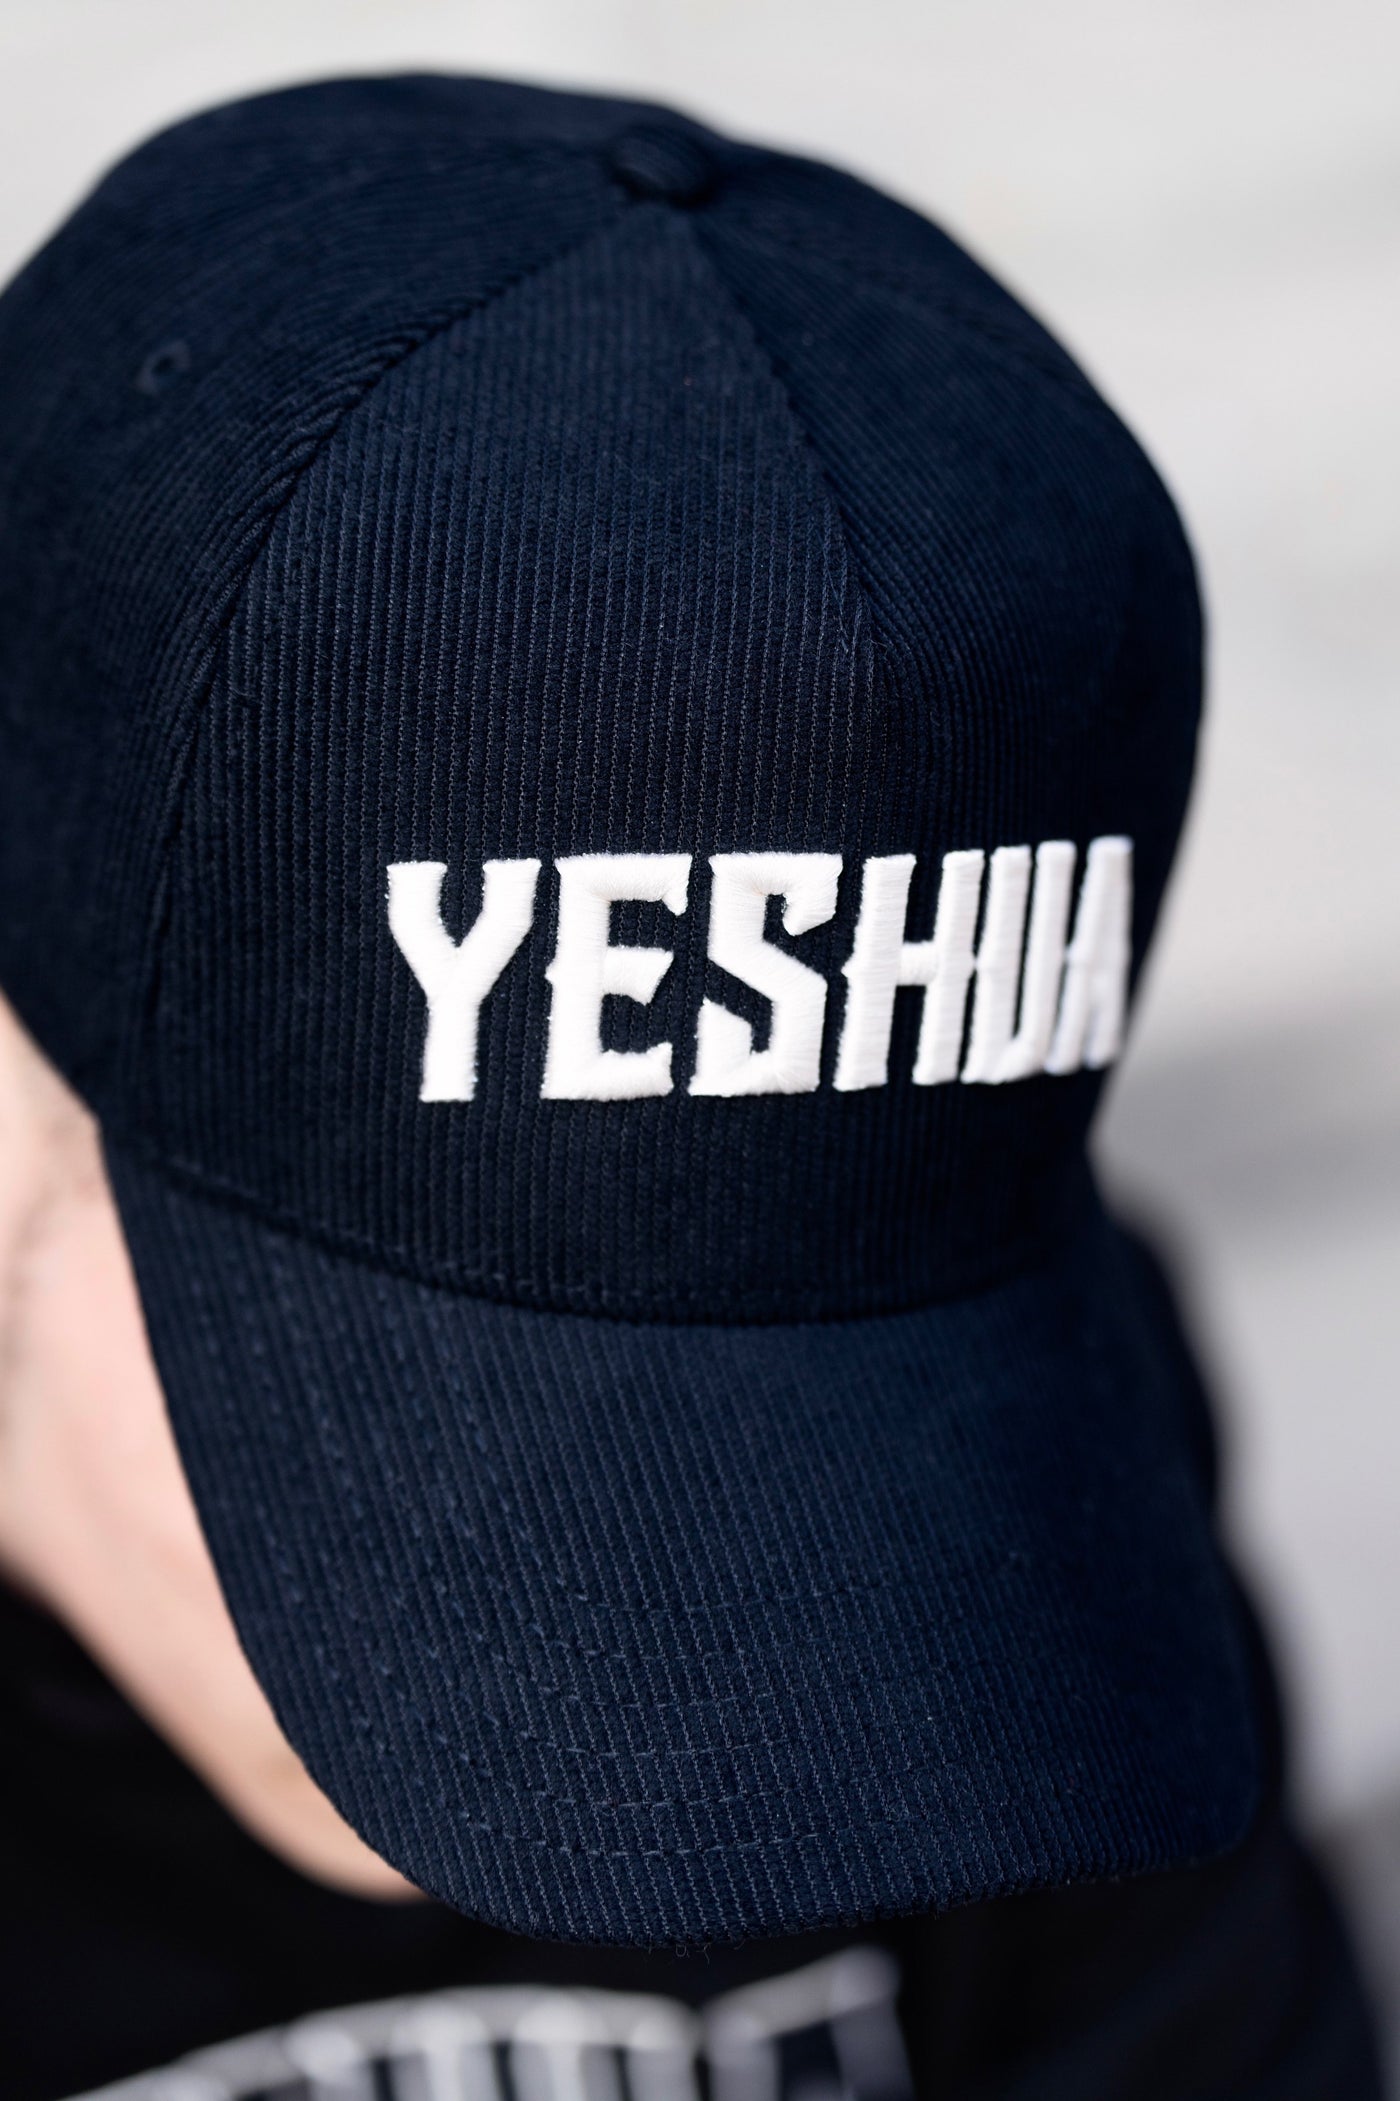 Yeshua LUX Corduroy Hat - Black